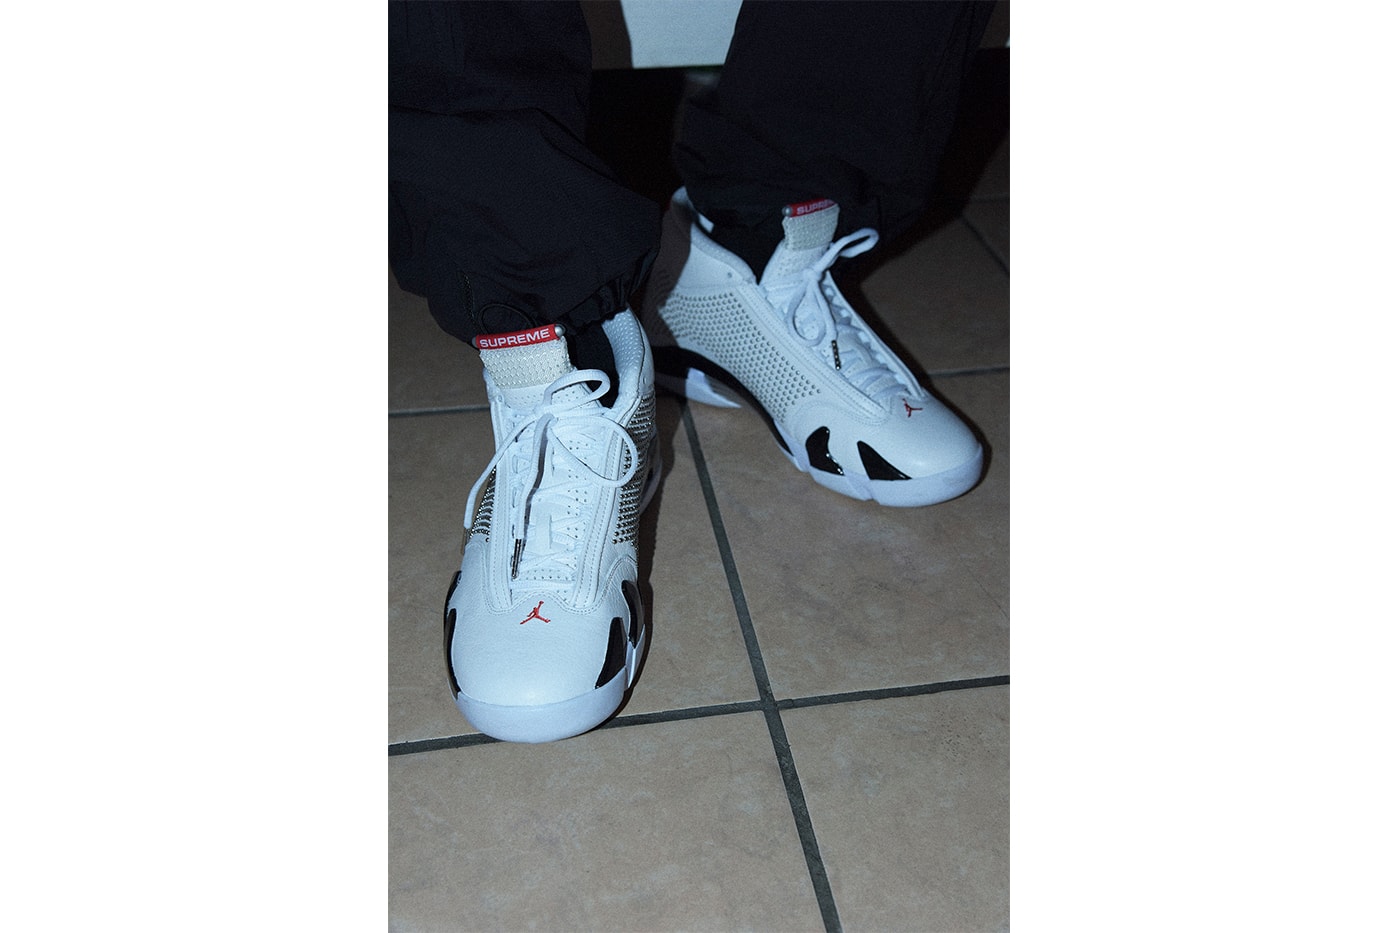 Supreme Air Jordan XIV 14 Official Look black blue White Michael Jordan Release Info Date Price